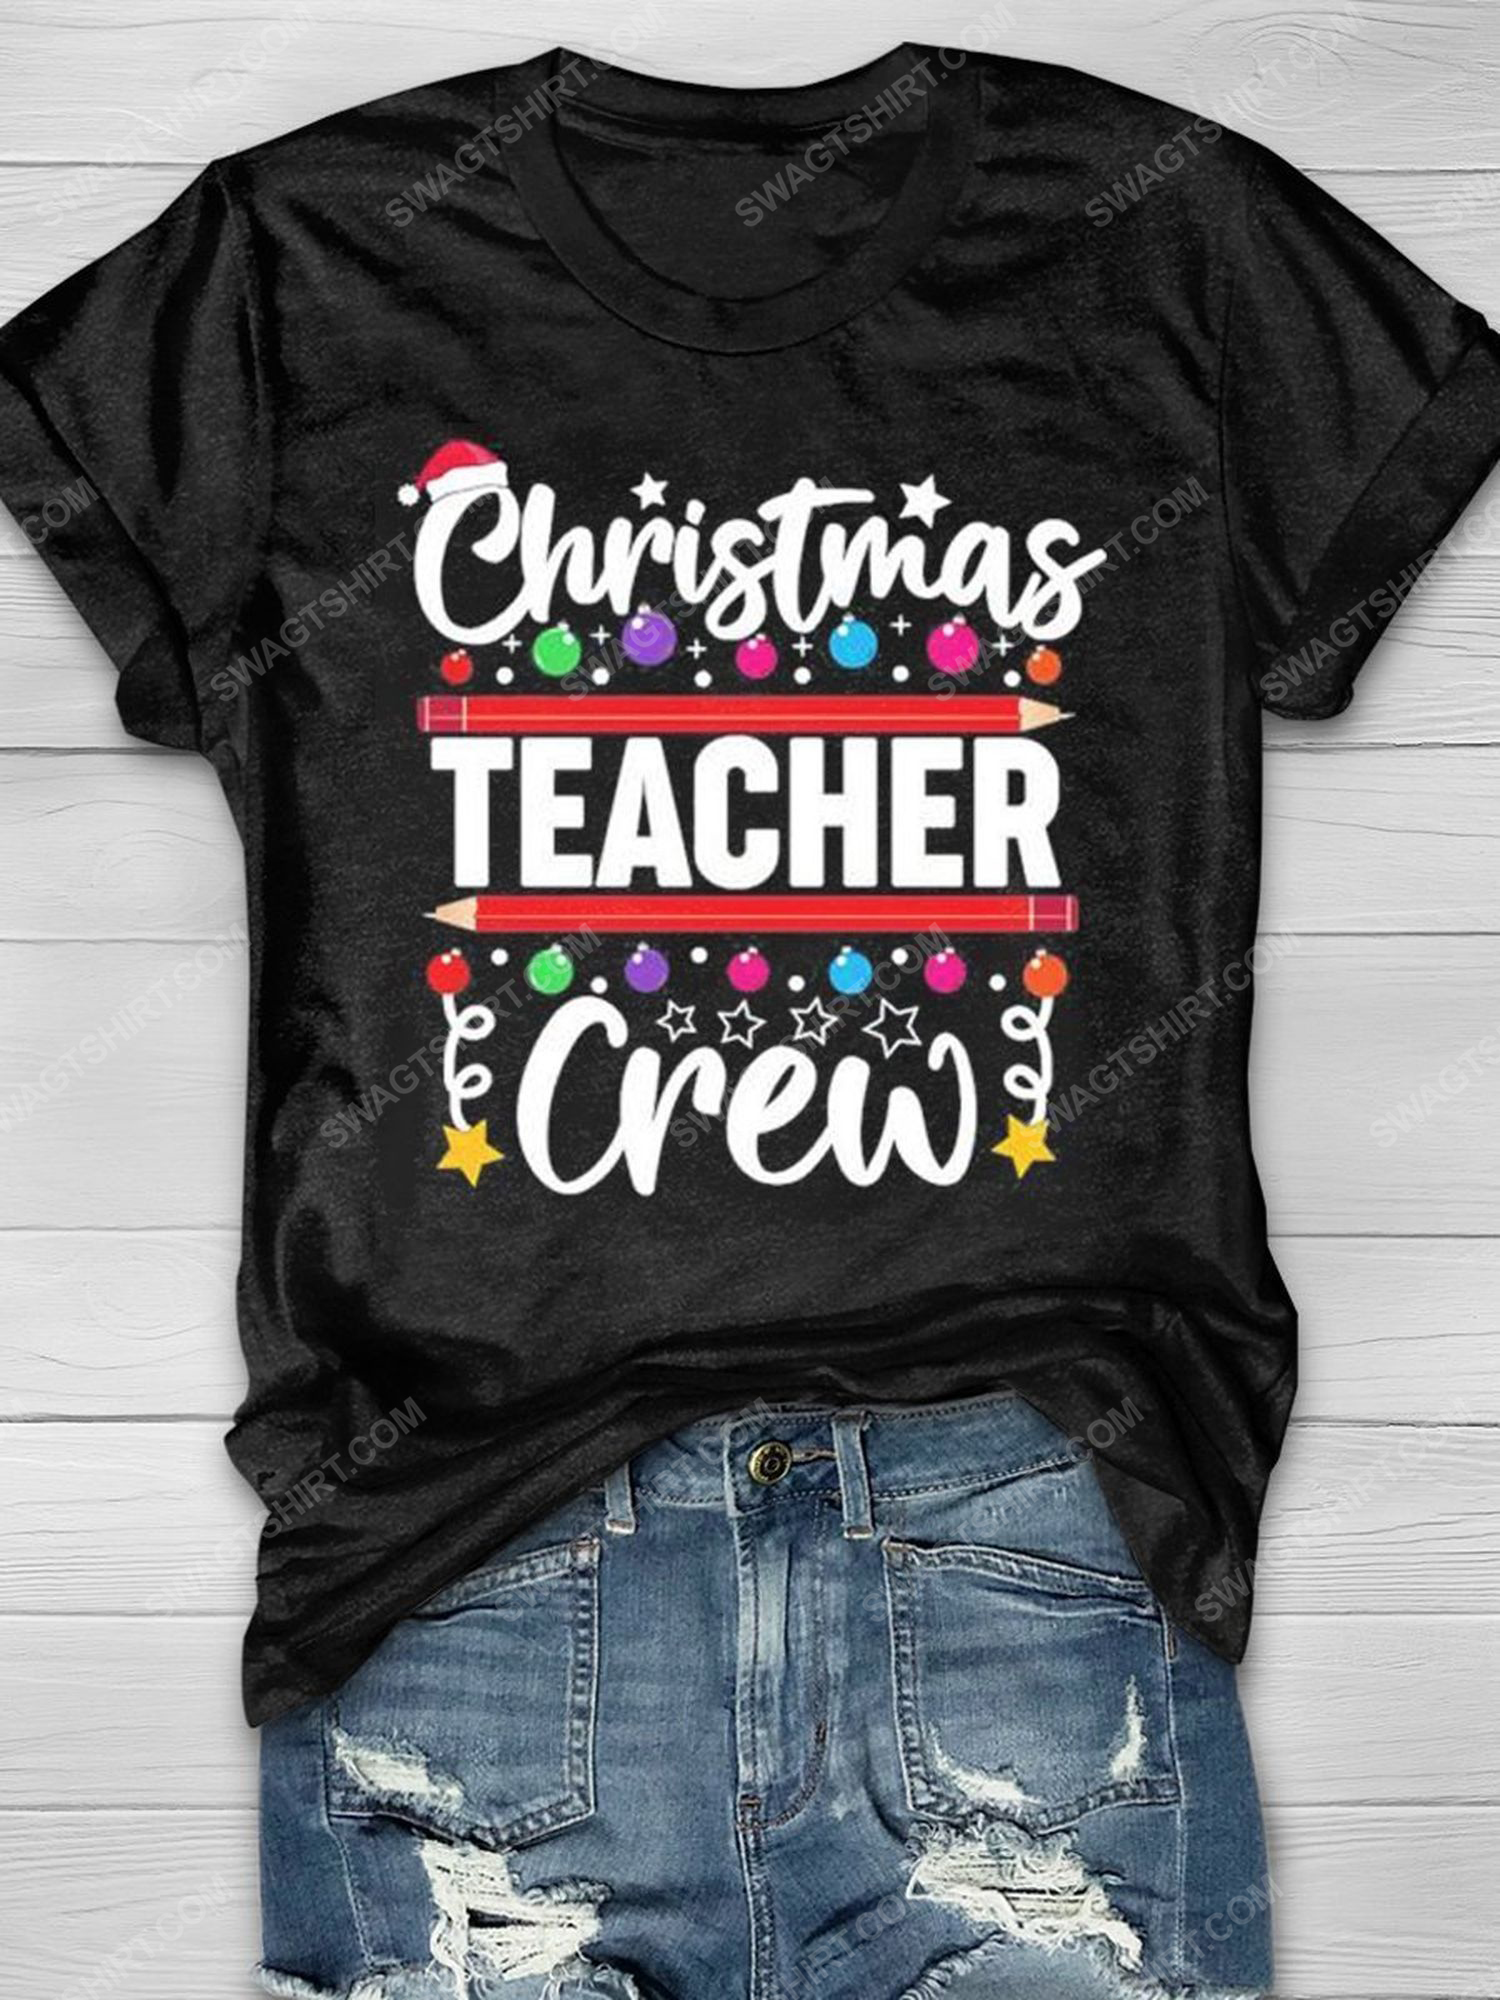 Christmas teacher crew shirt 1